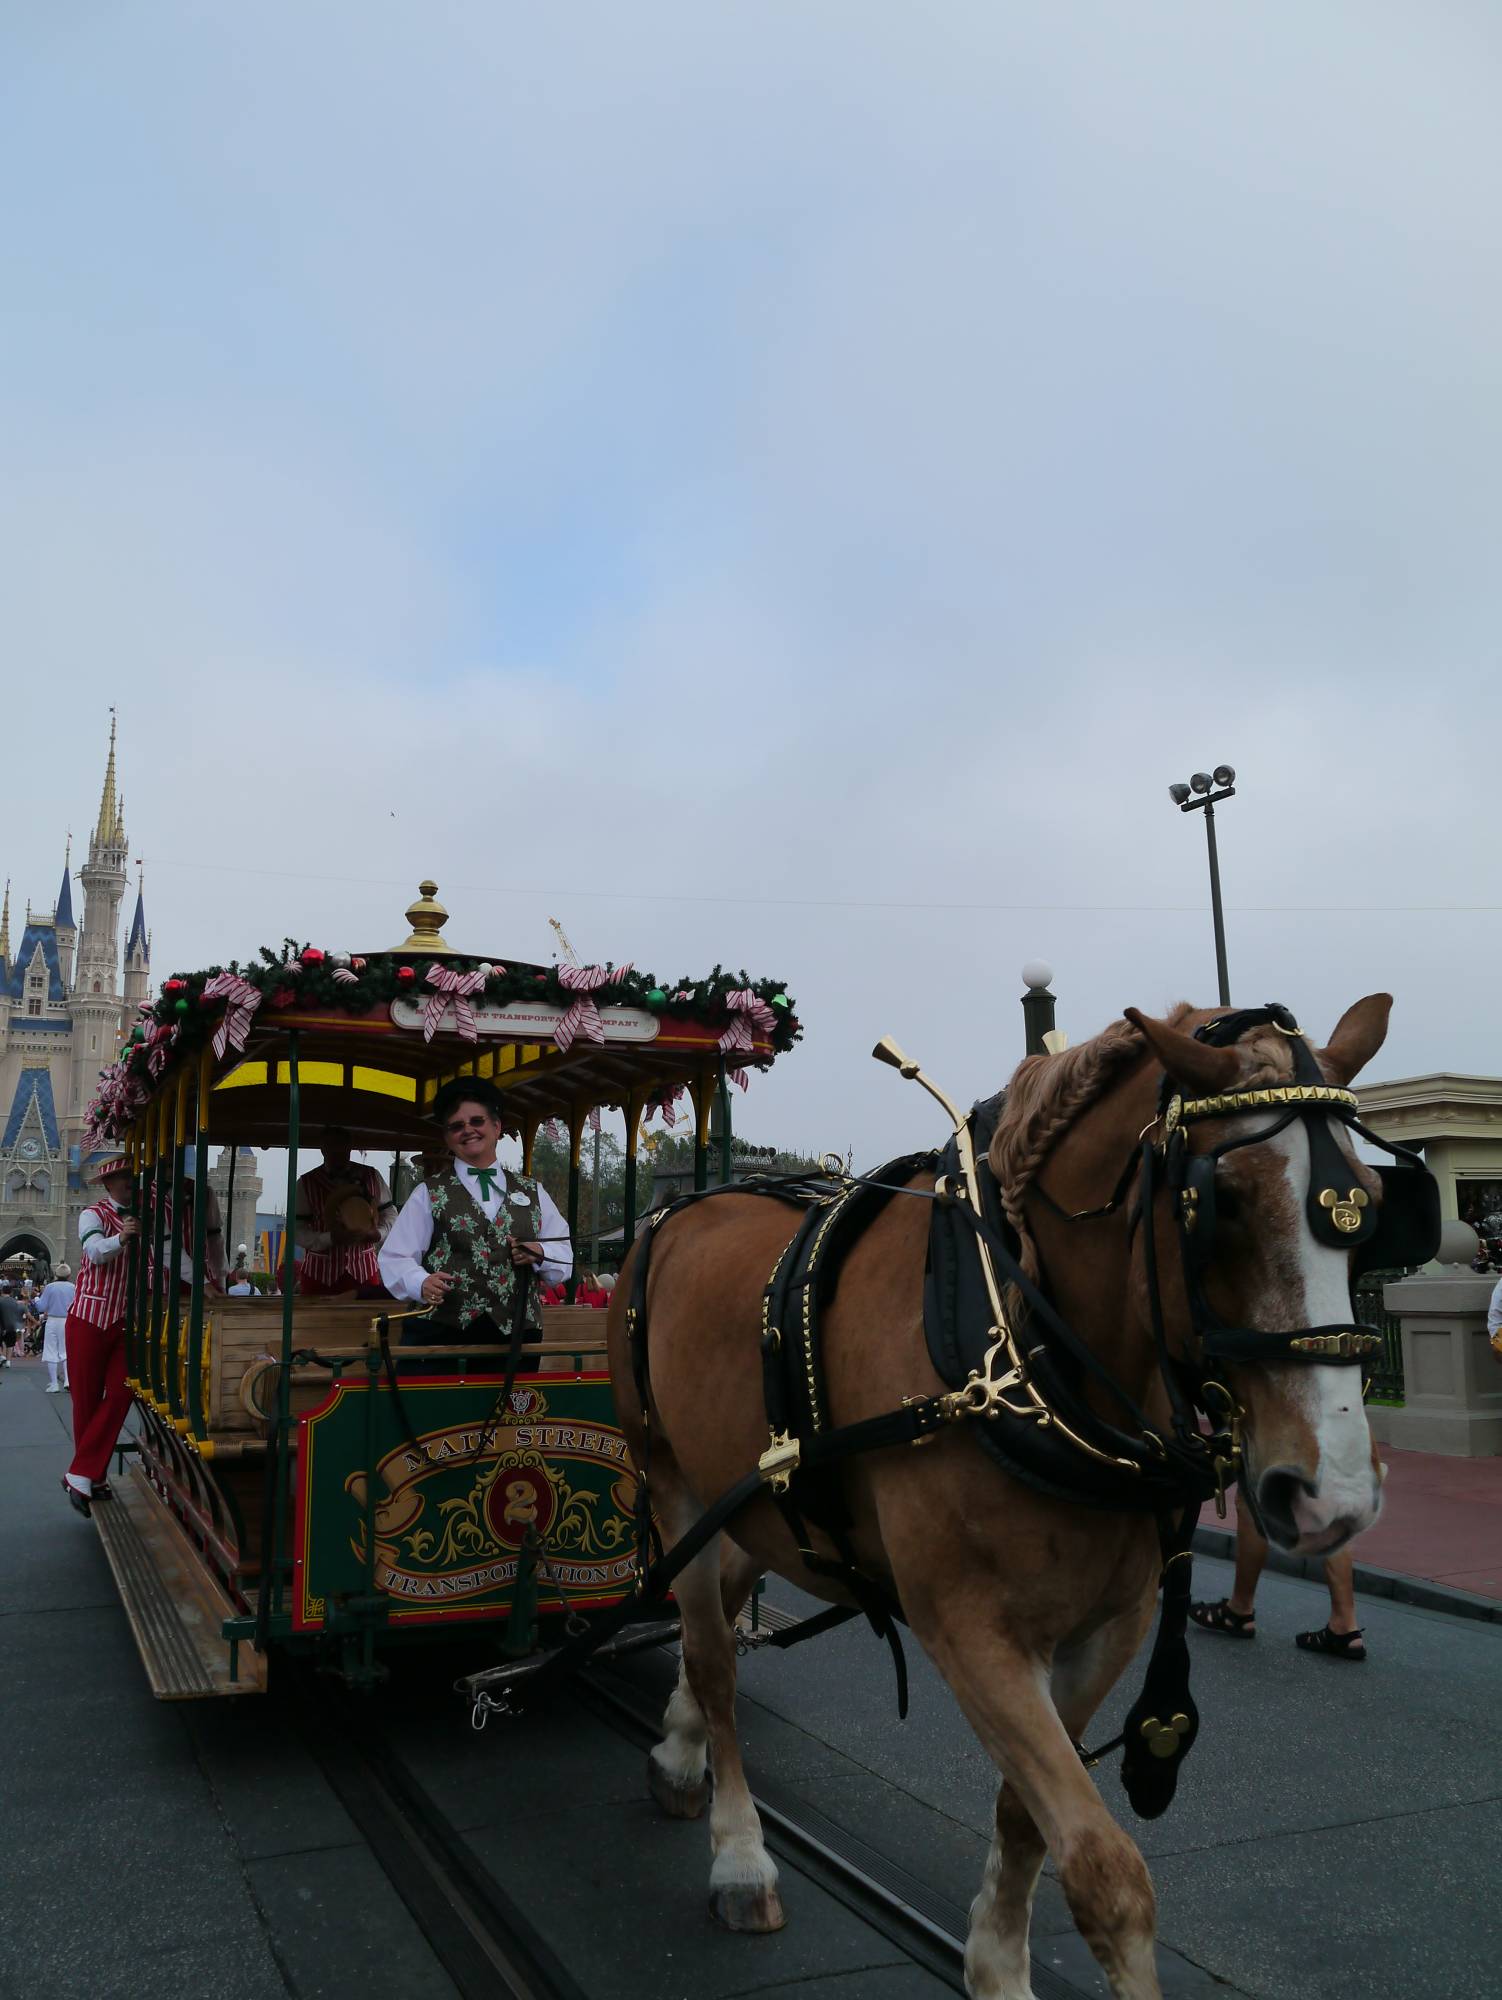 Magic Kingdom - Main Street horse and carriage